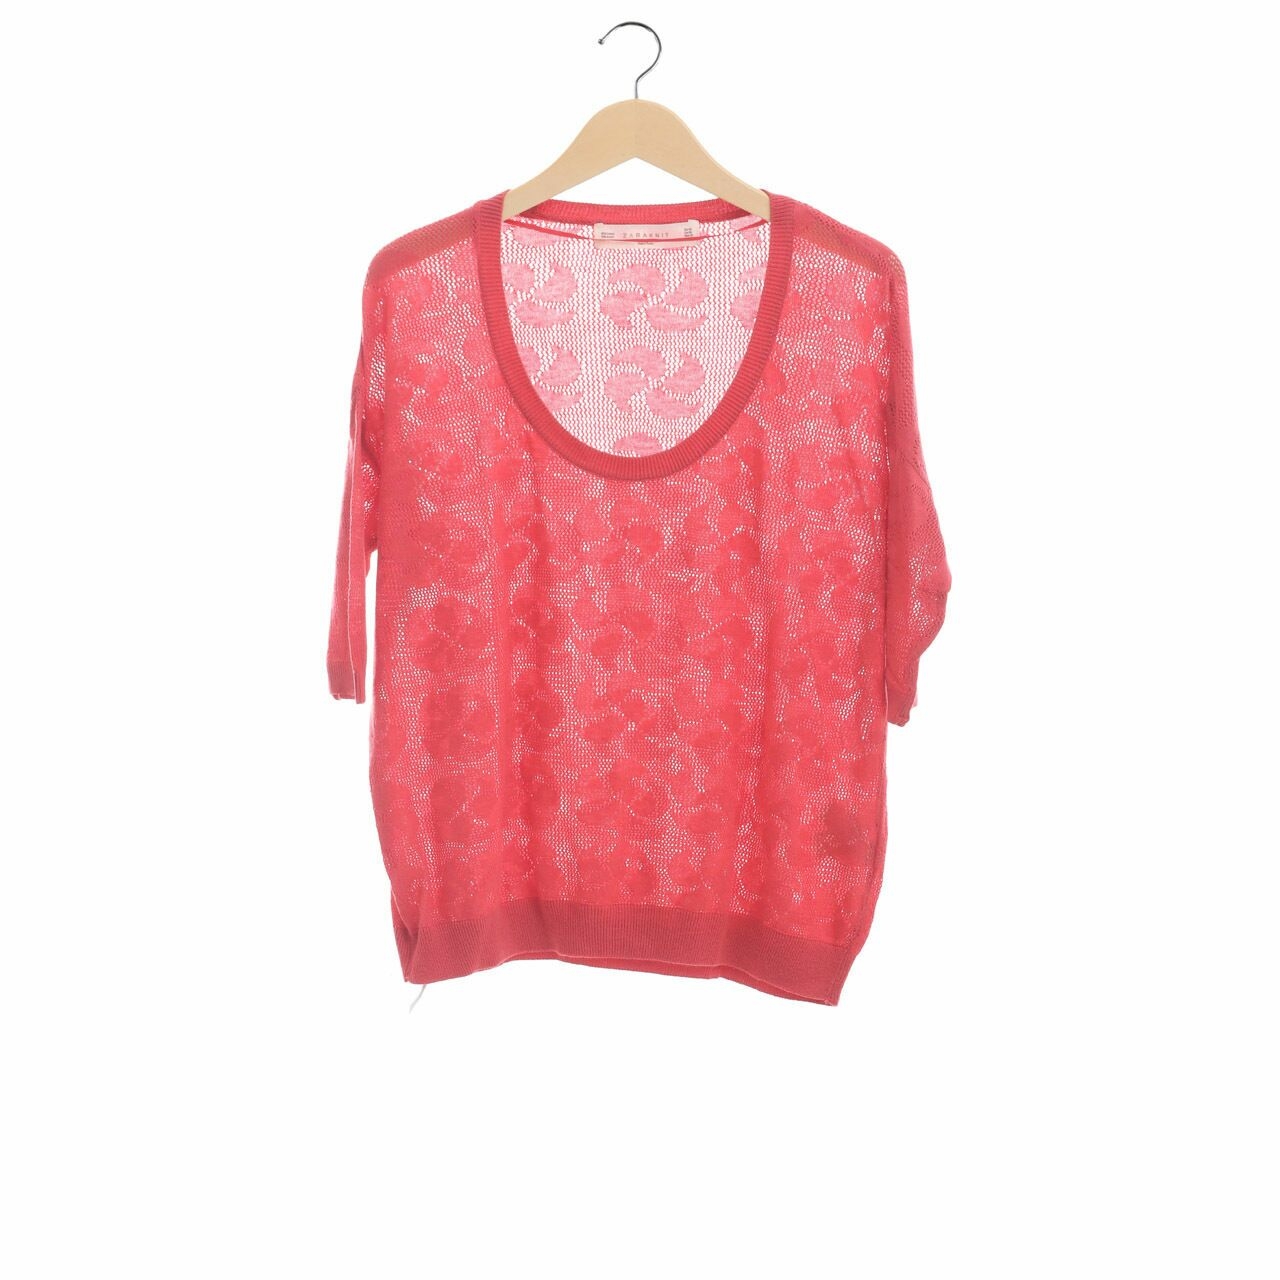 Zara Red Knit Sweater